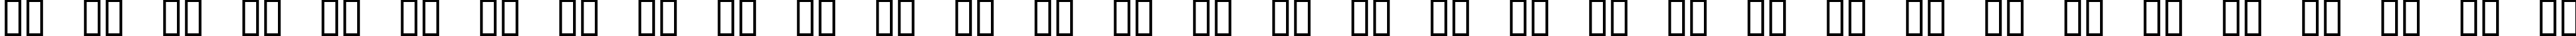 Пример написания русского алфавита шрифтом Excelerate Straight